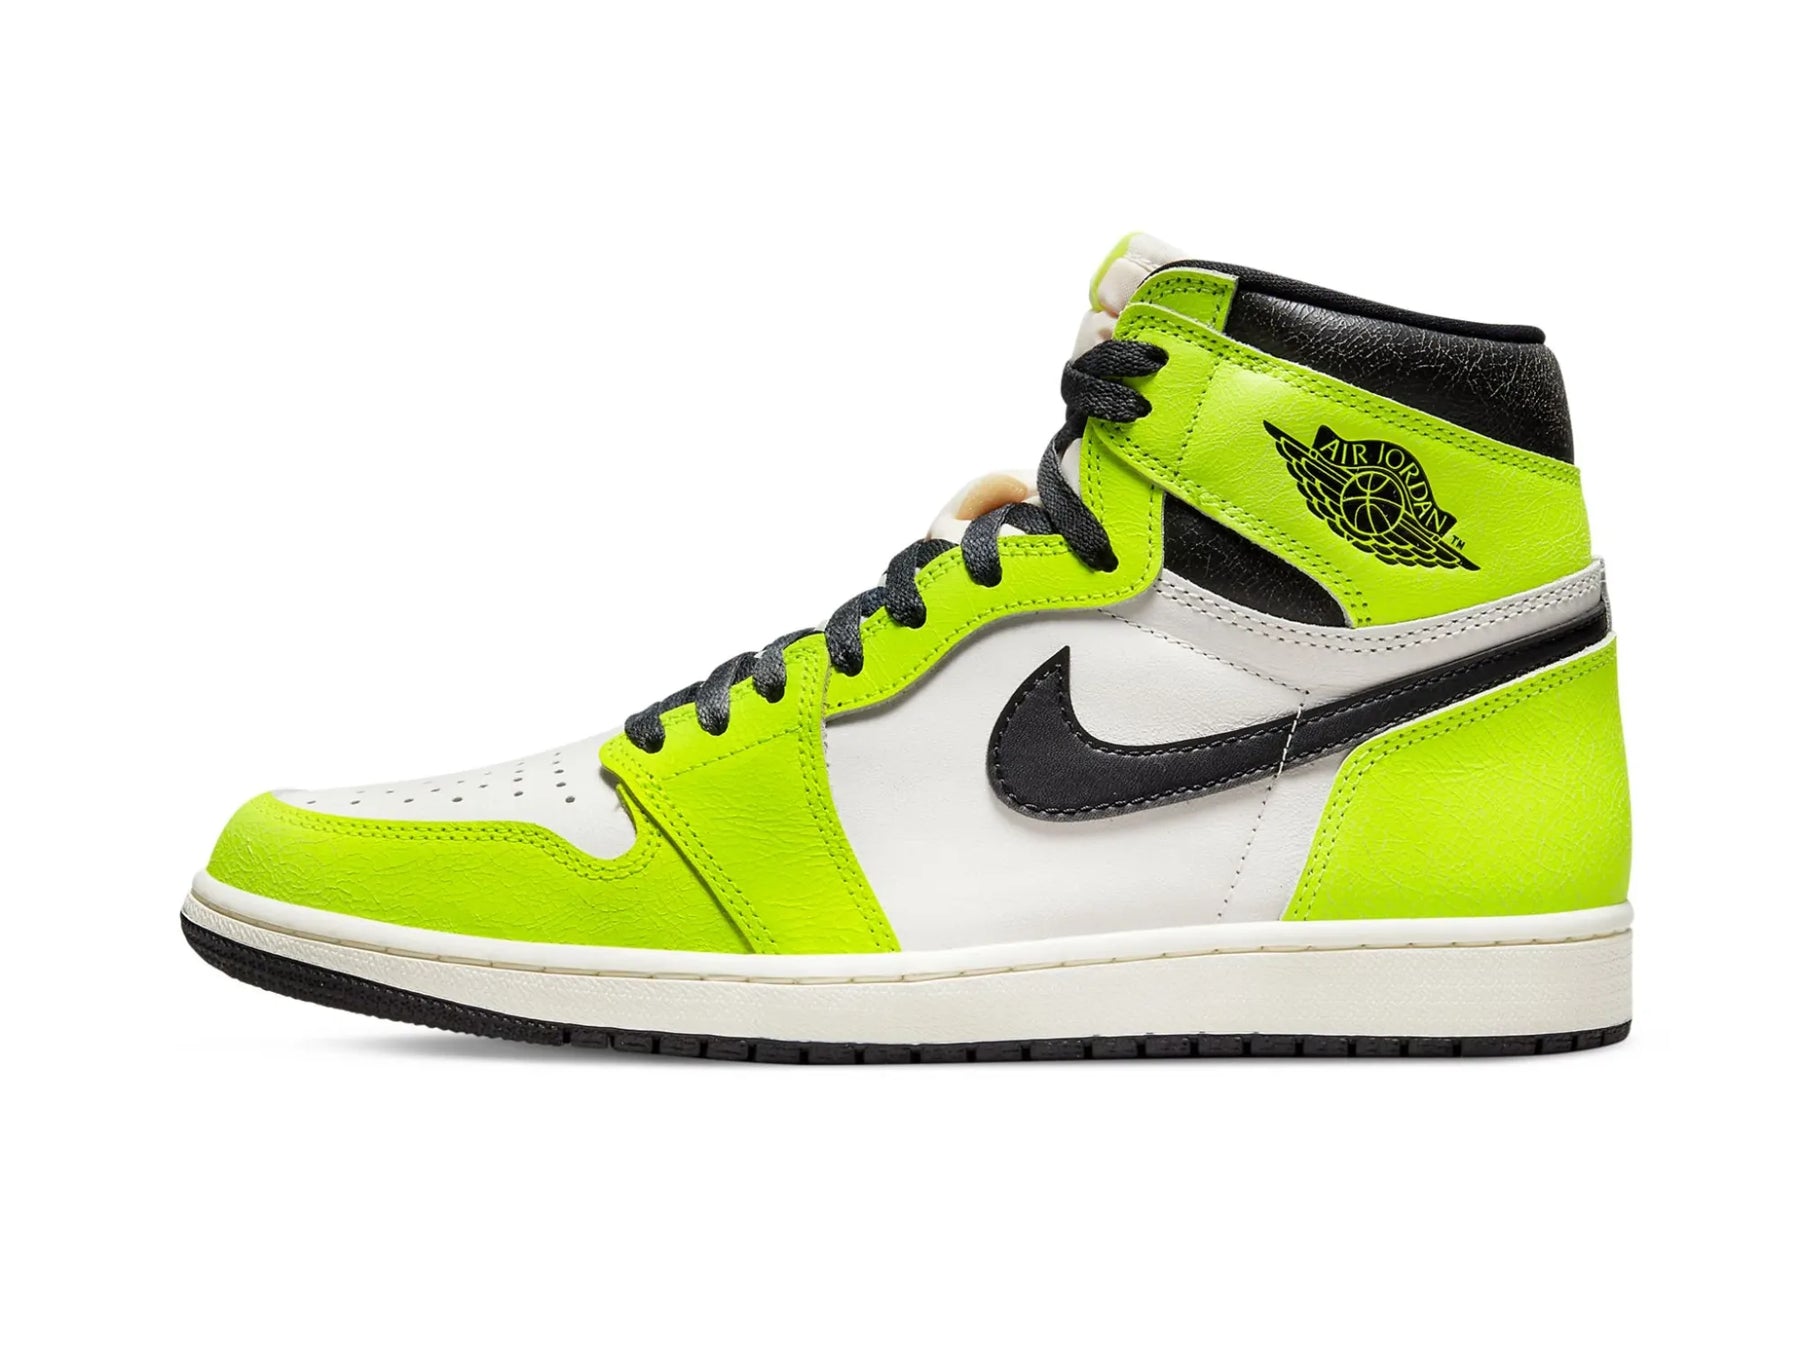 Nike Air Jordan 1 Retro High OG "Visionaire" - street-bill.dk